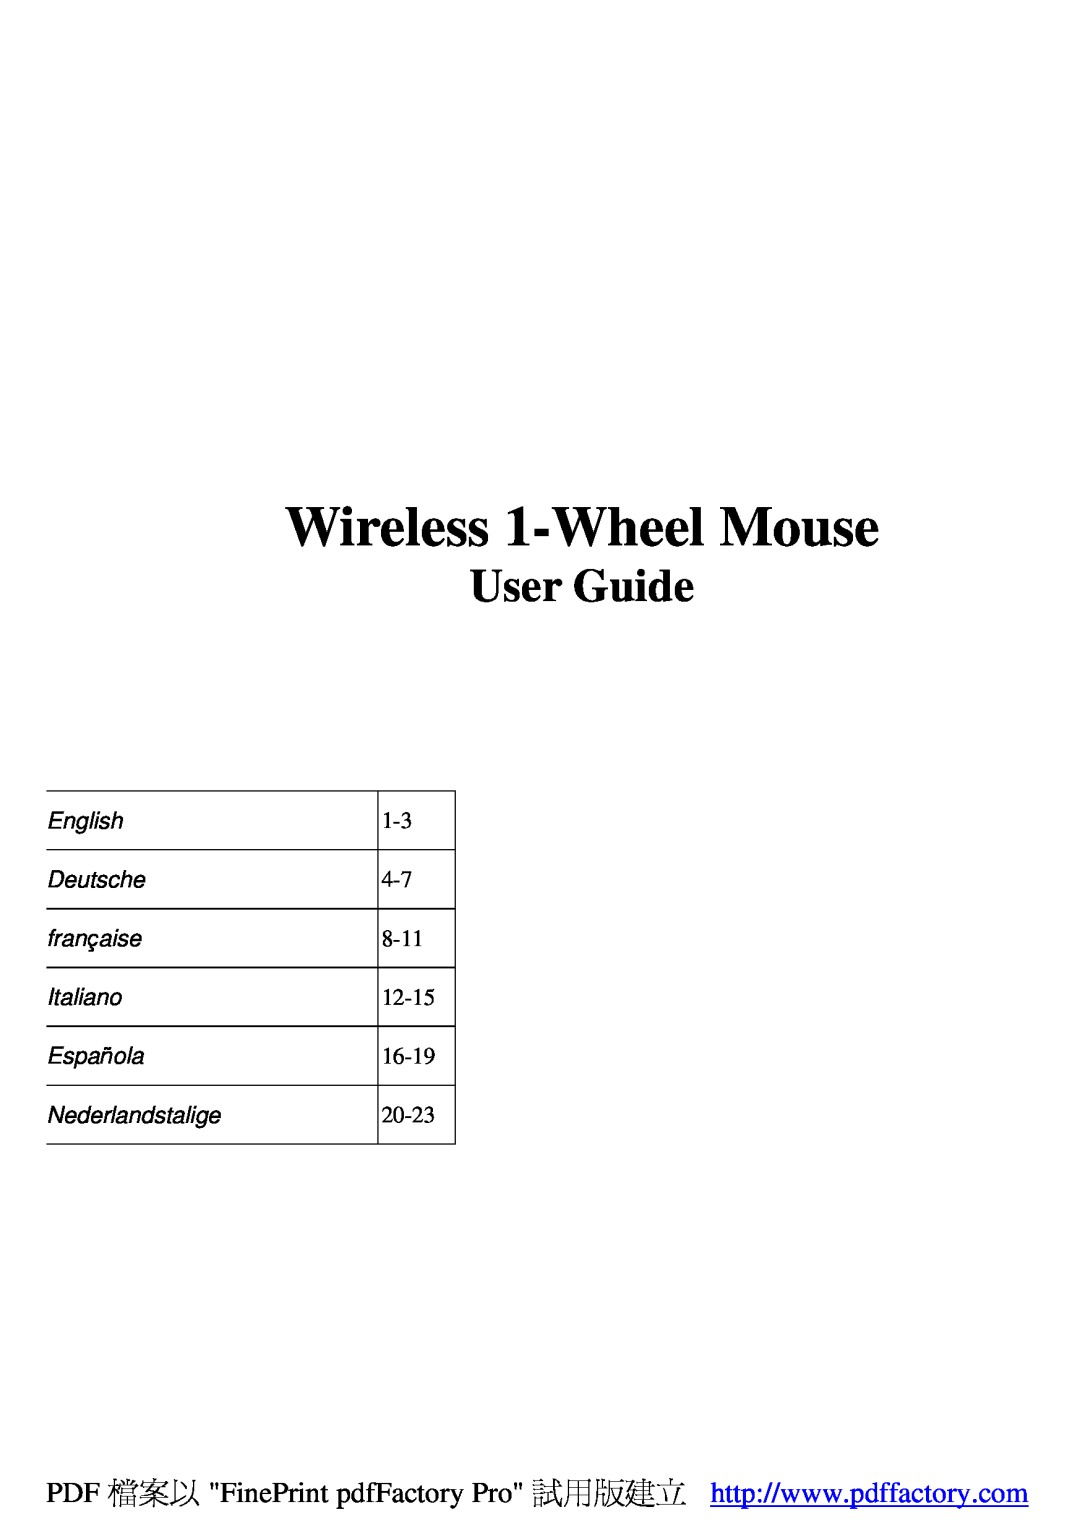 A4 Tech Wireless 1-Wheel Mouse manual User Guide, English, Deutsche, française, Italiano, Española, Nederlandstalige, 8-11 